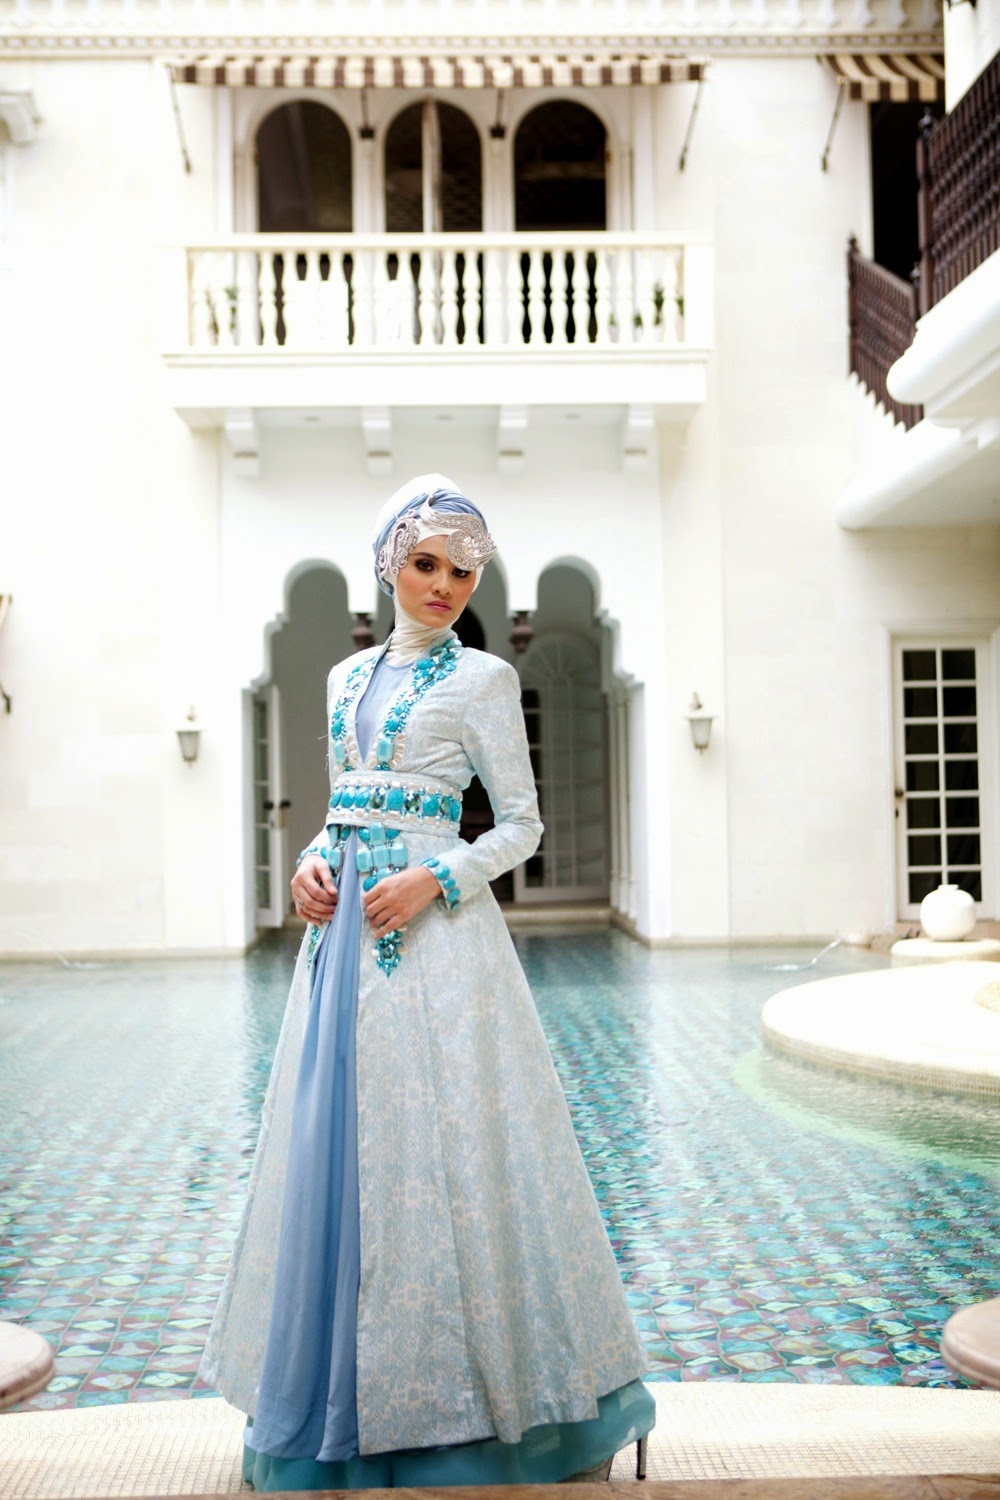  Model  gaun  pesta muslim  elegan  dan cantik terbaru  Gaya 